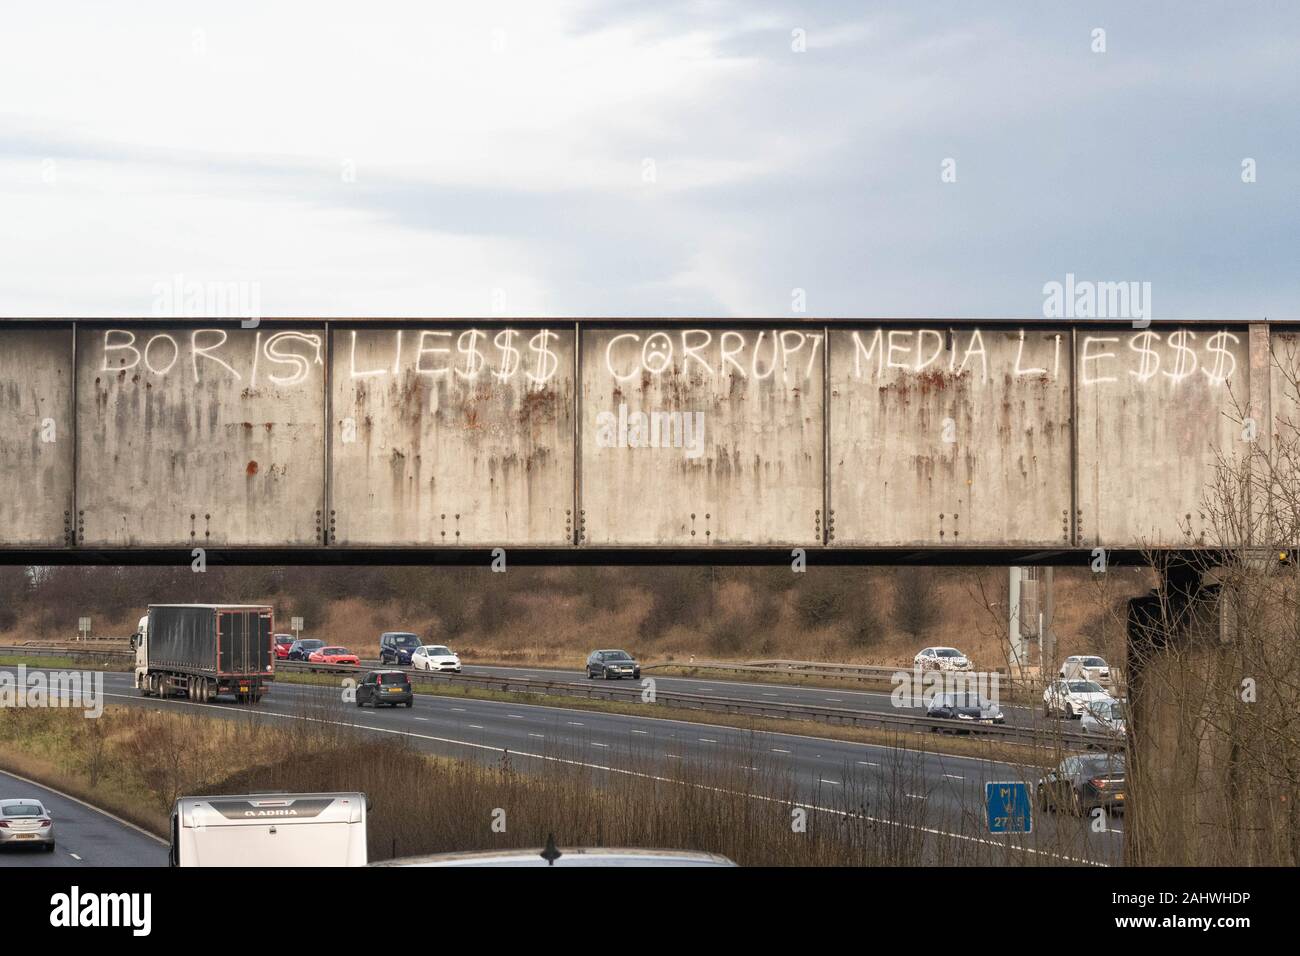 Anti Boris Johnson Graffiti - Boris liegt beschädigte Medien liegt - auf der Brücke geschrieben, neben der Autobahn M1 an Dodworth, Barnsley, South Yorkshire, England Stockfoto